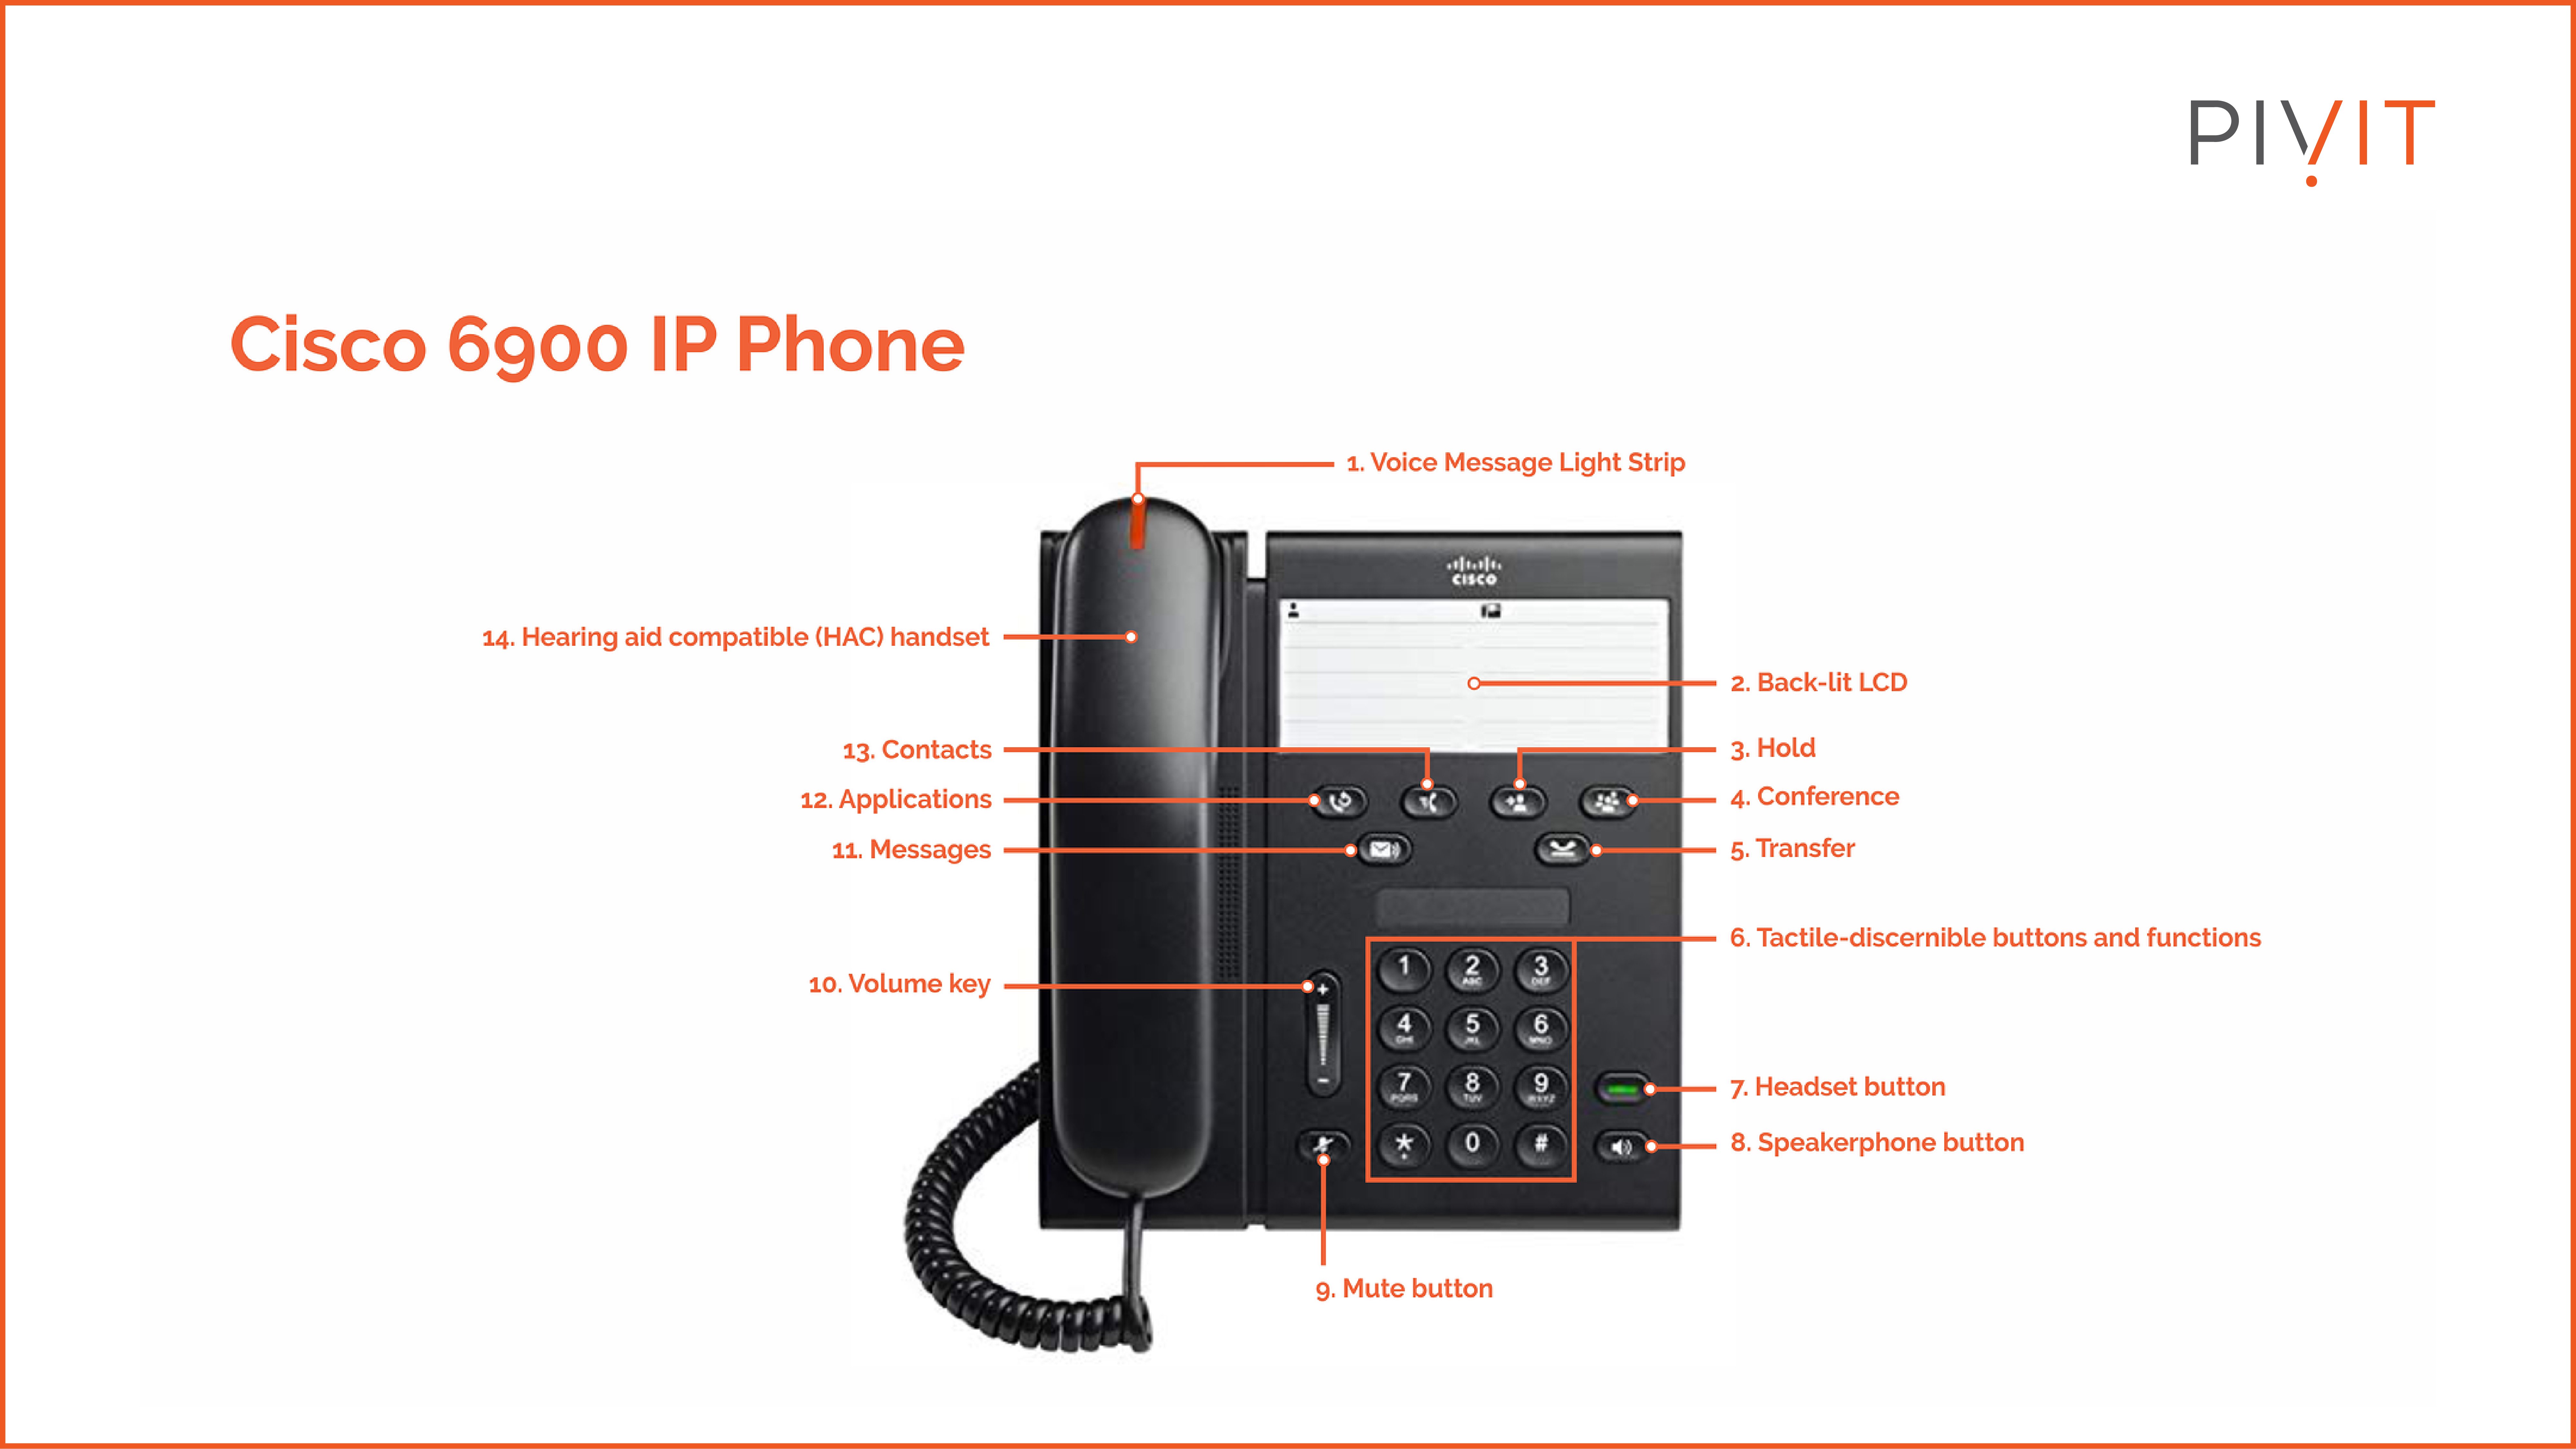 Cisco 6900 IP Phone Part Descriptions